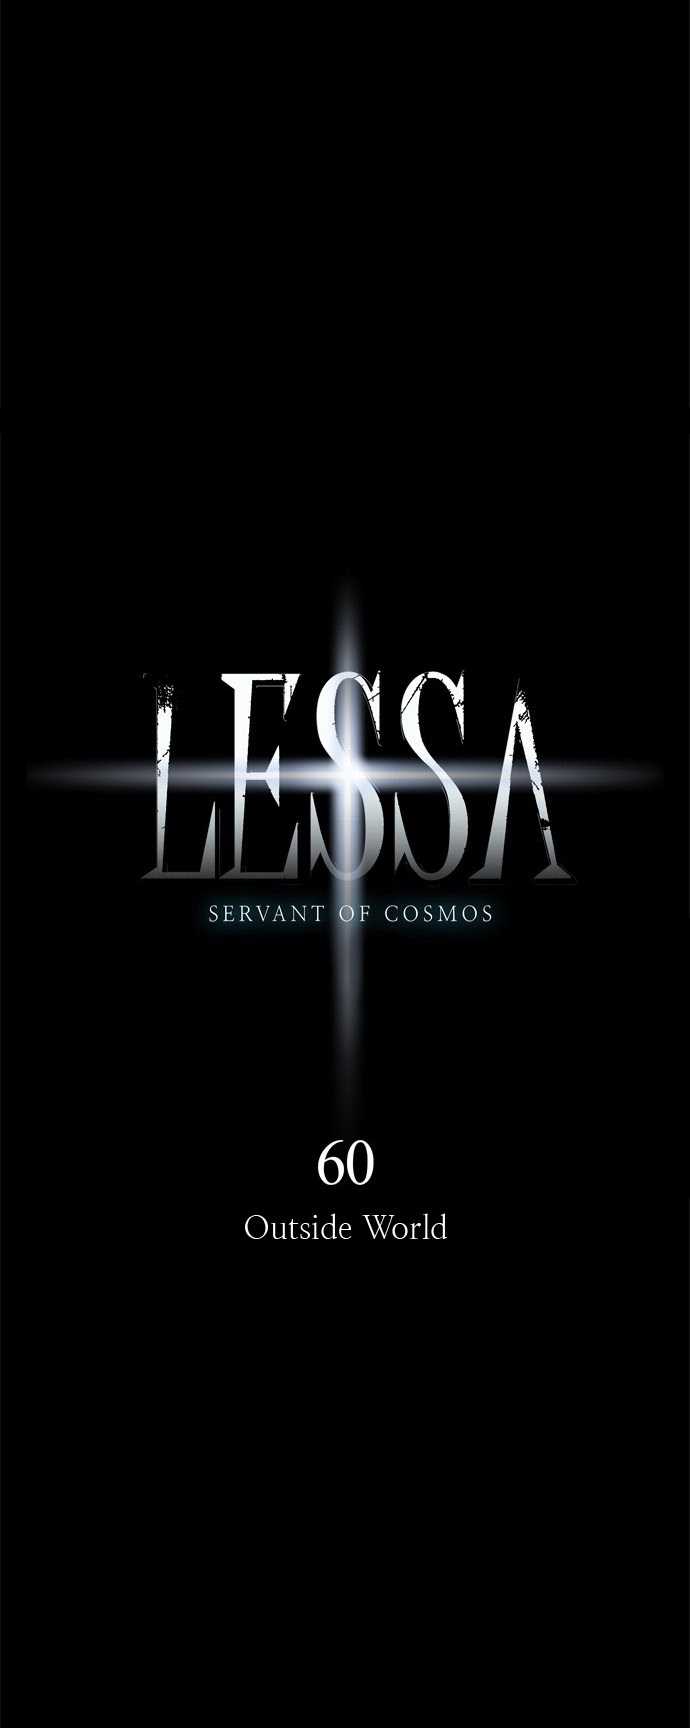 LESSA – Servant of Cosmos Chapter 60